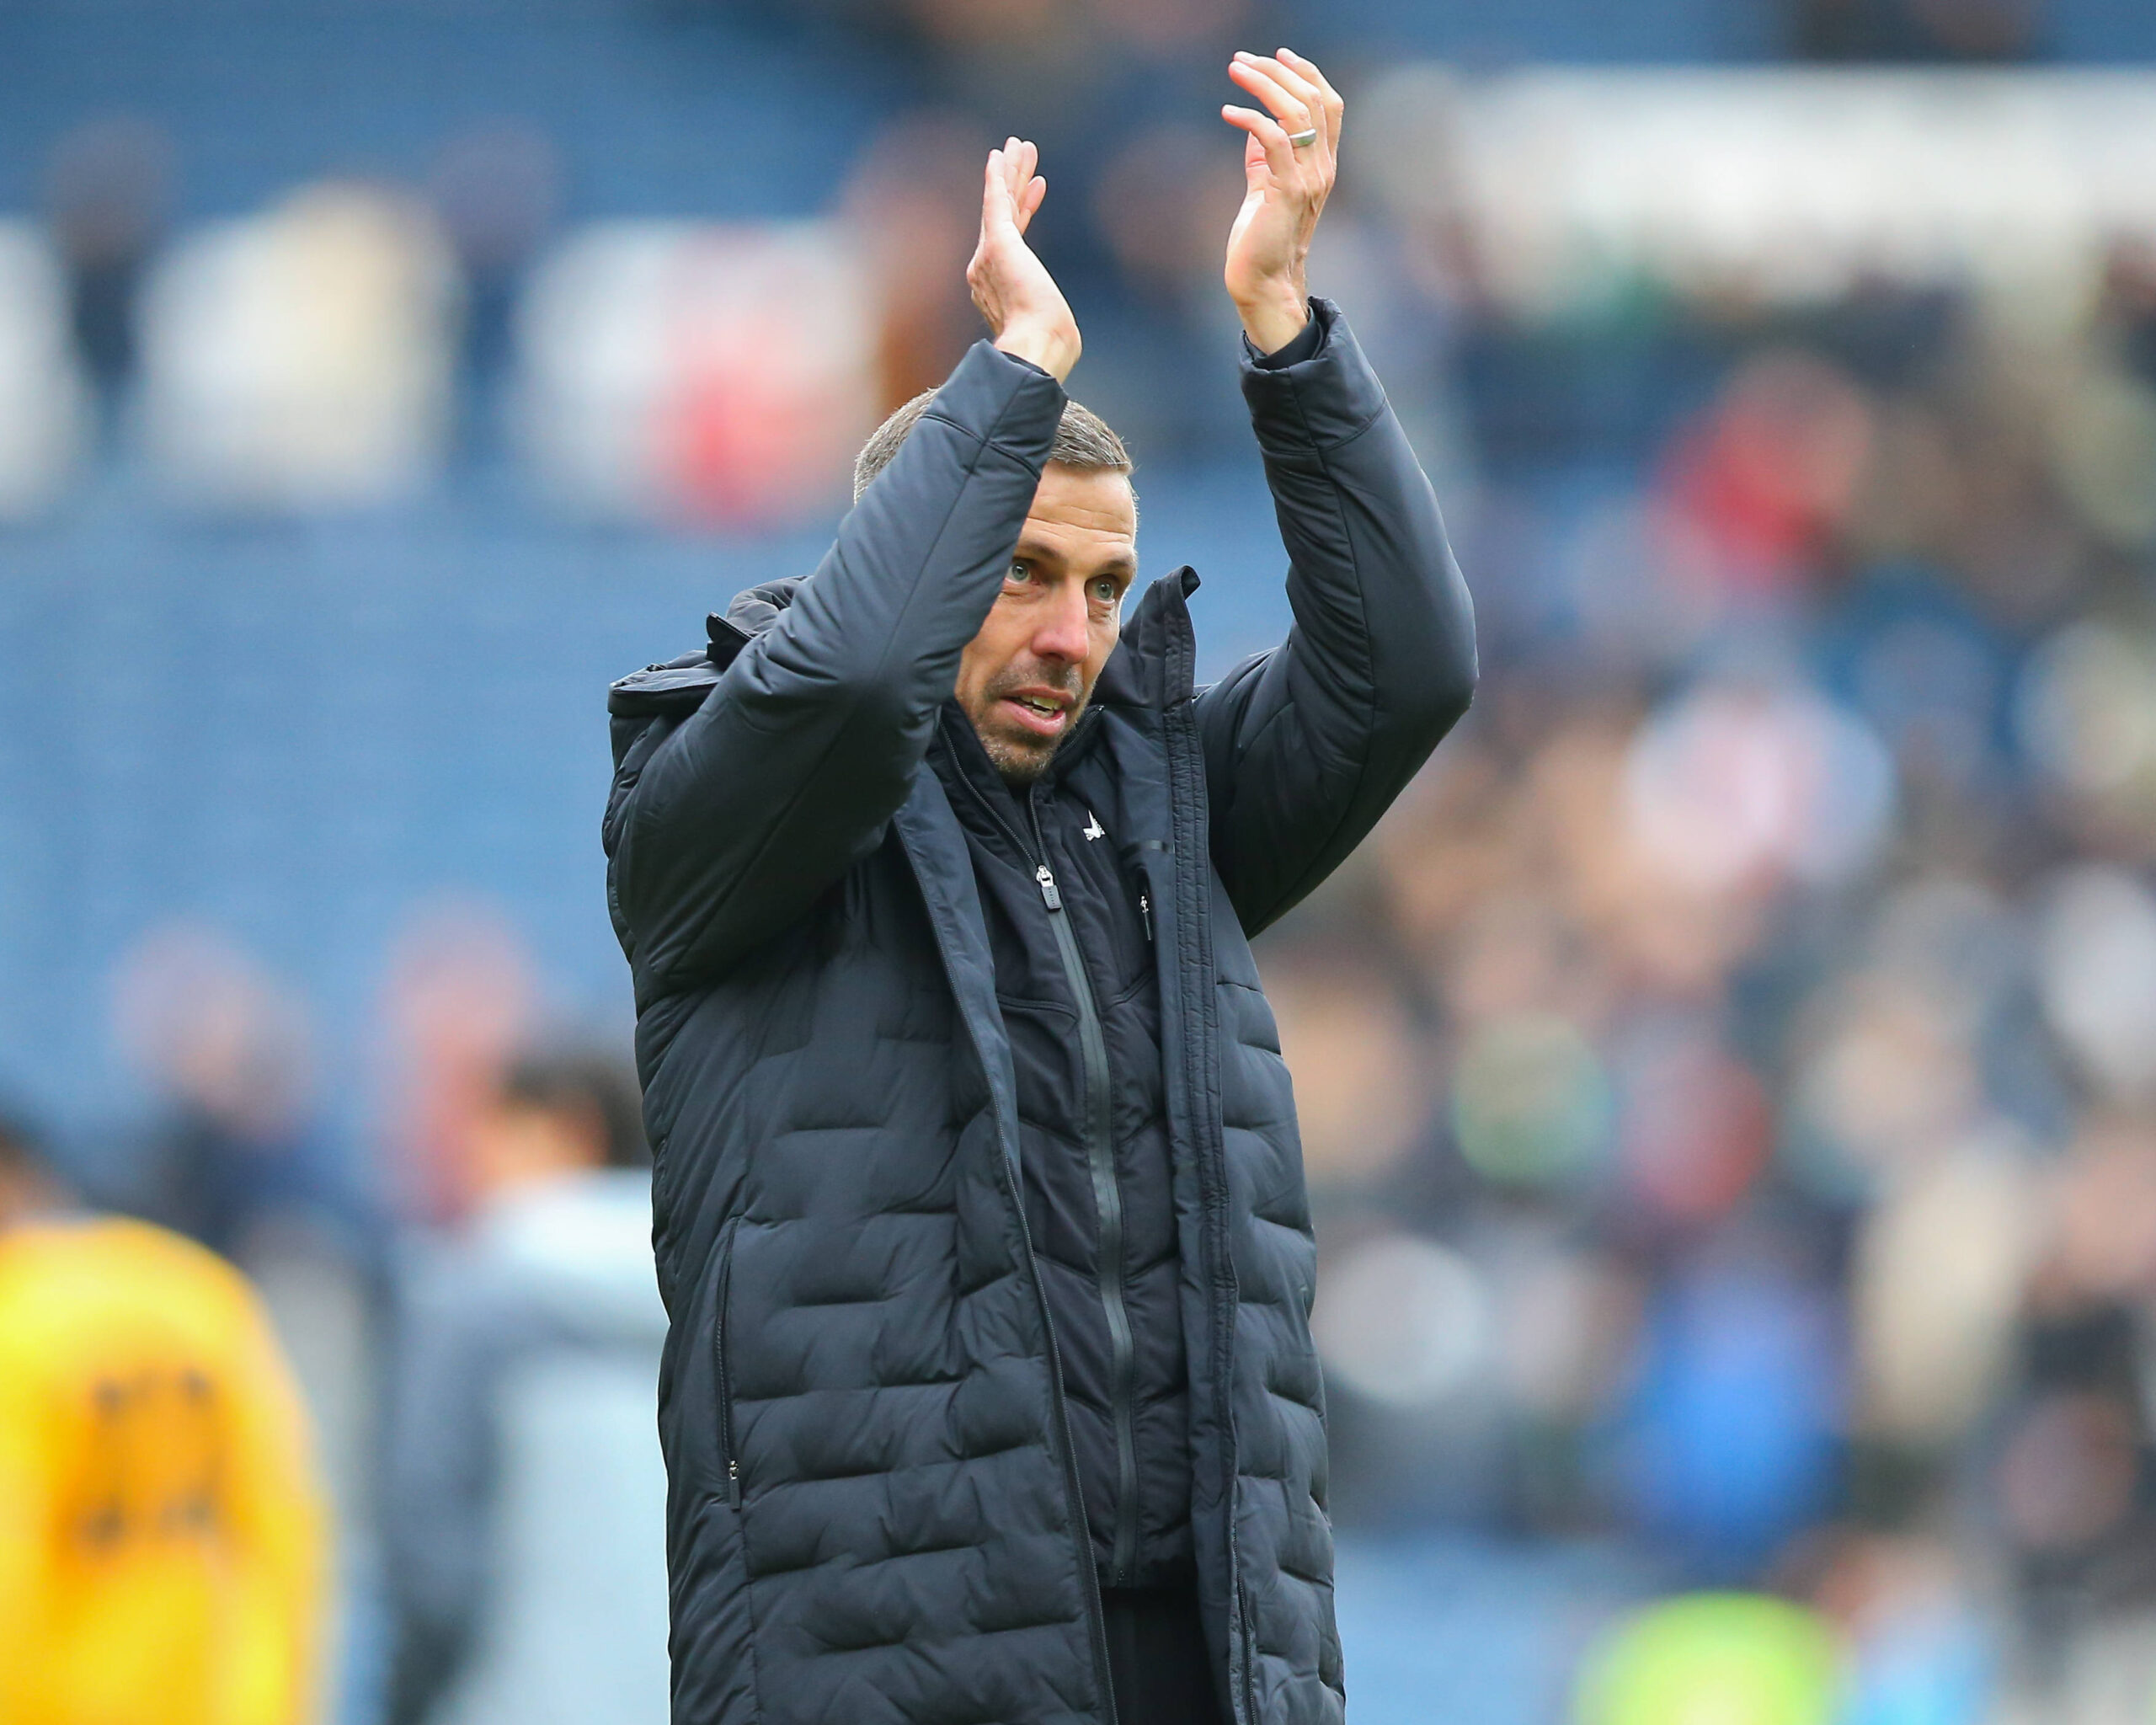 Wolves manager Gary O'Neil applauds fans after match